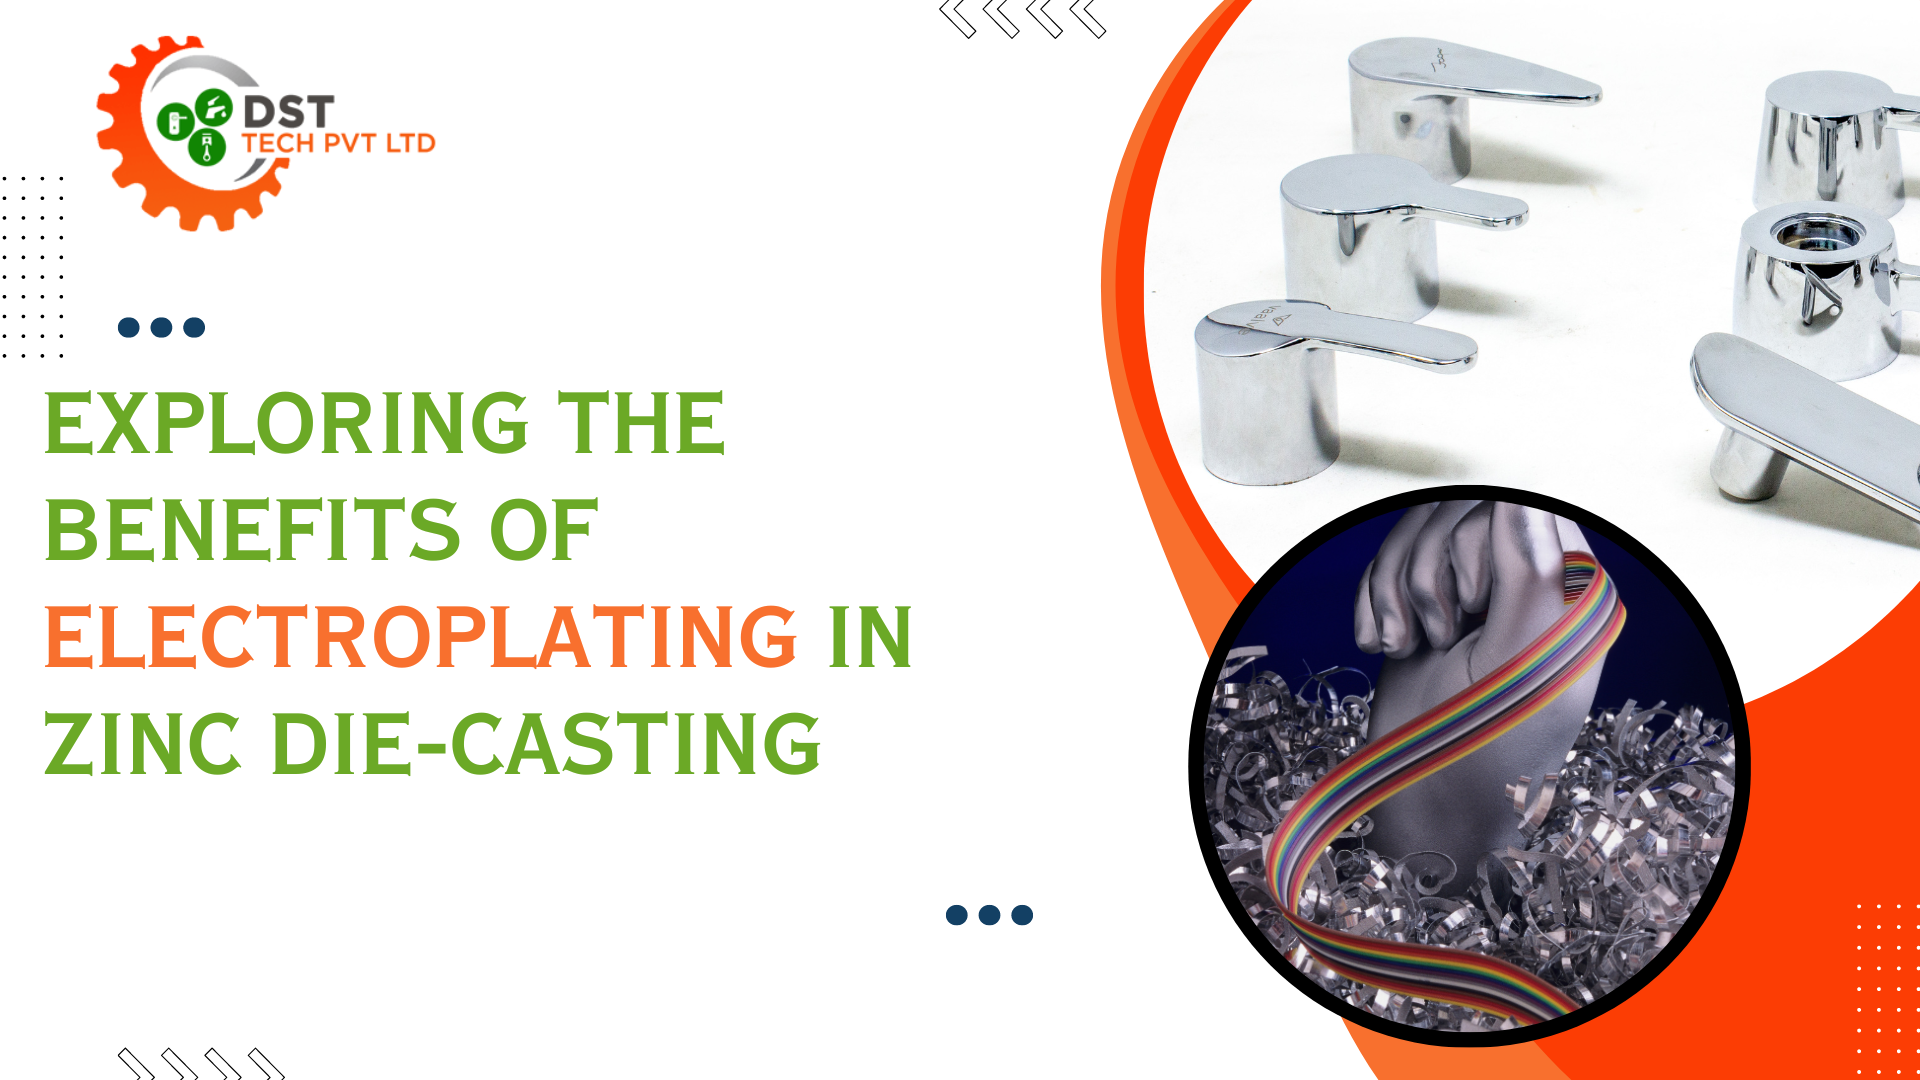 Electroplating in Zinc Die-Casting